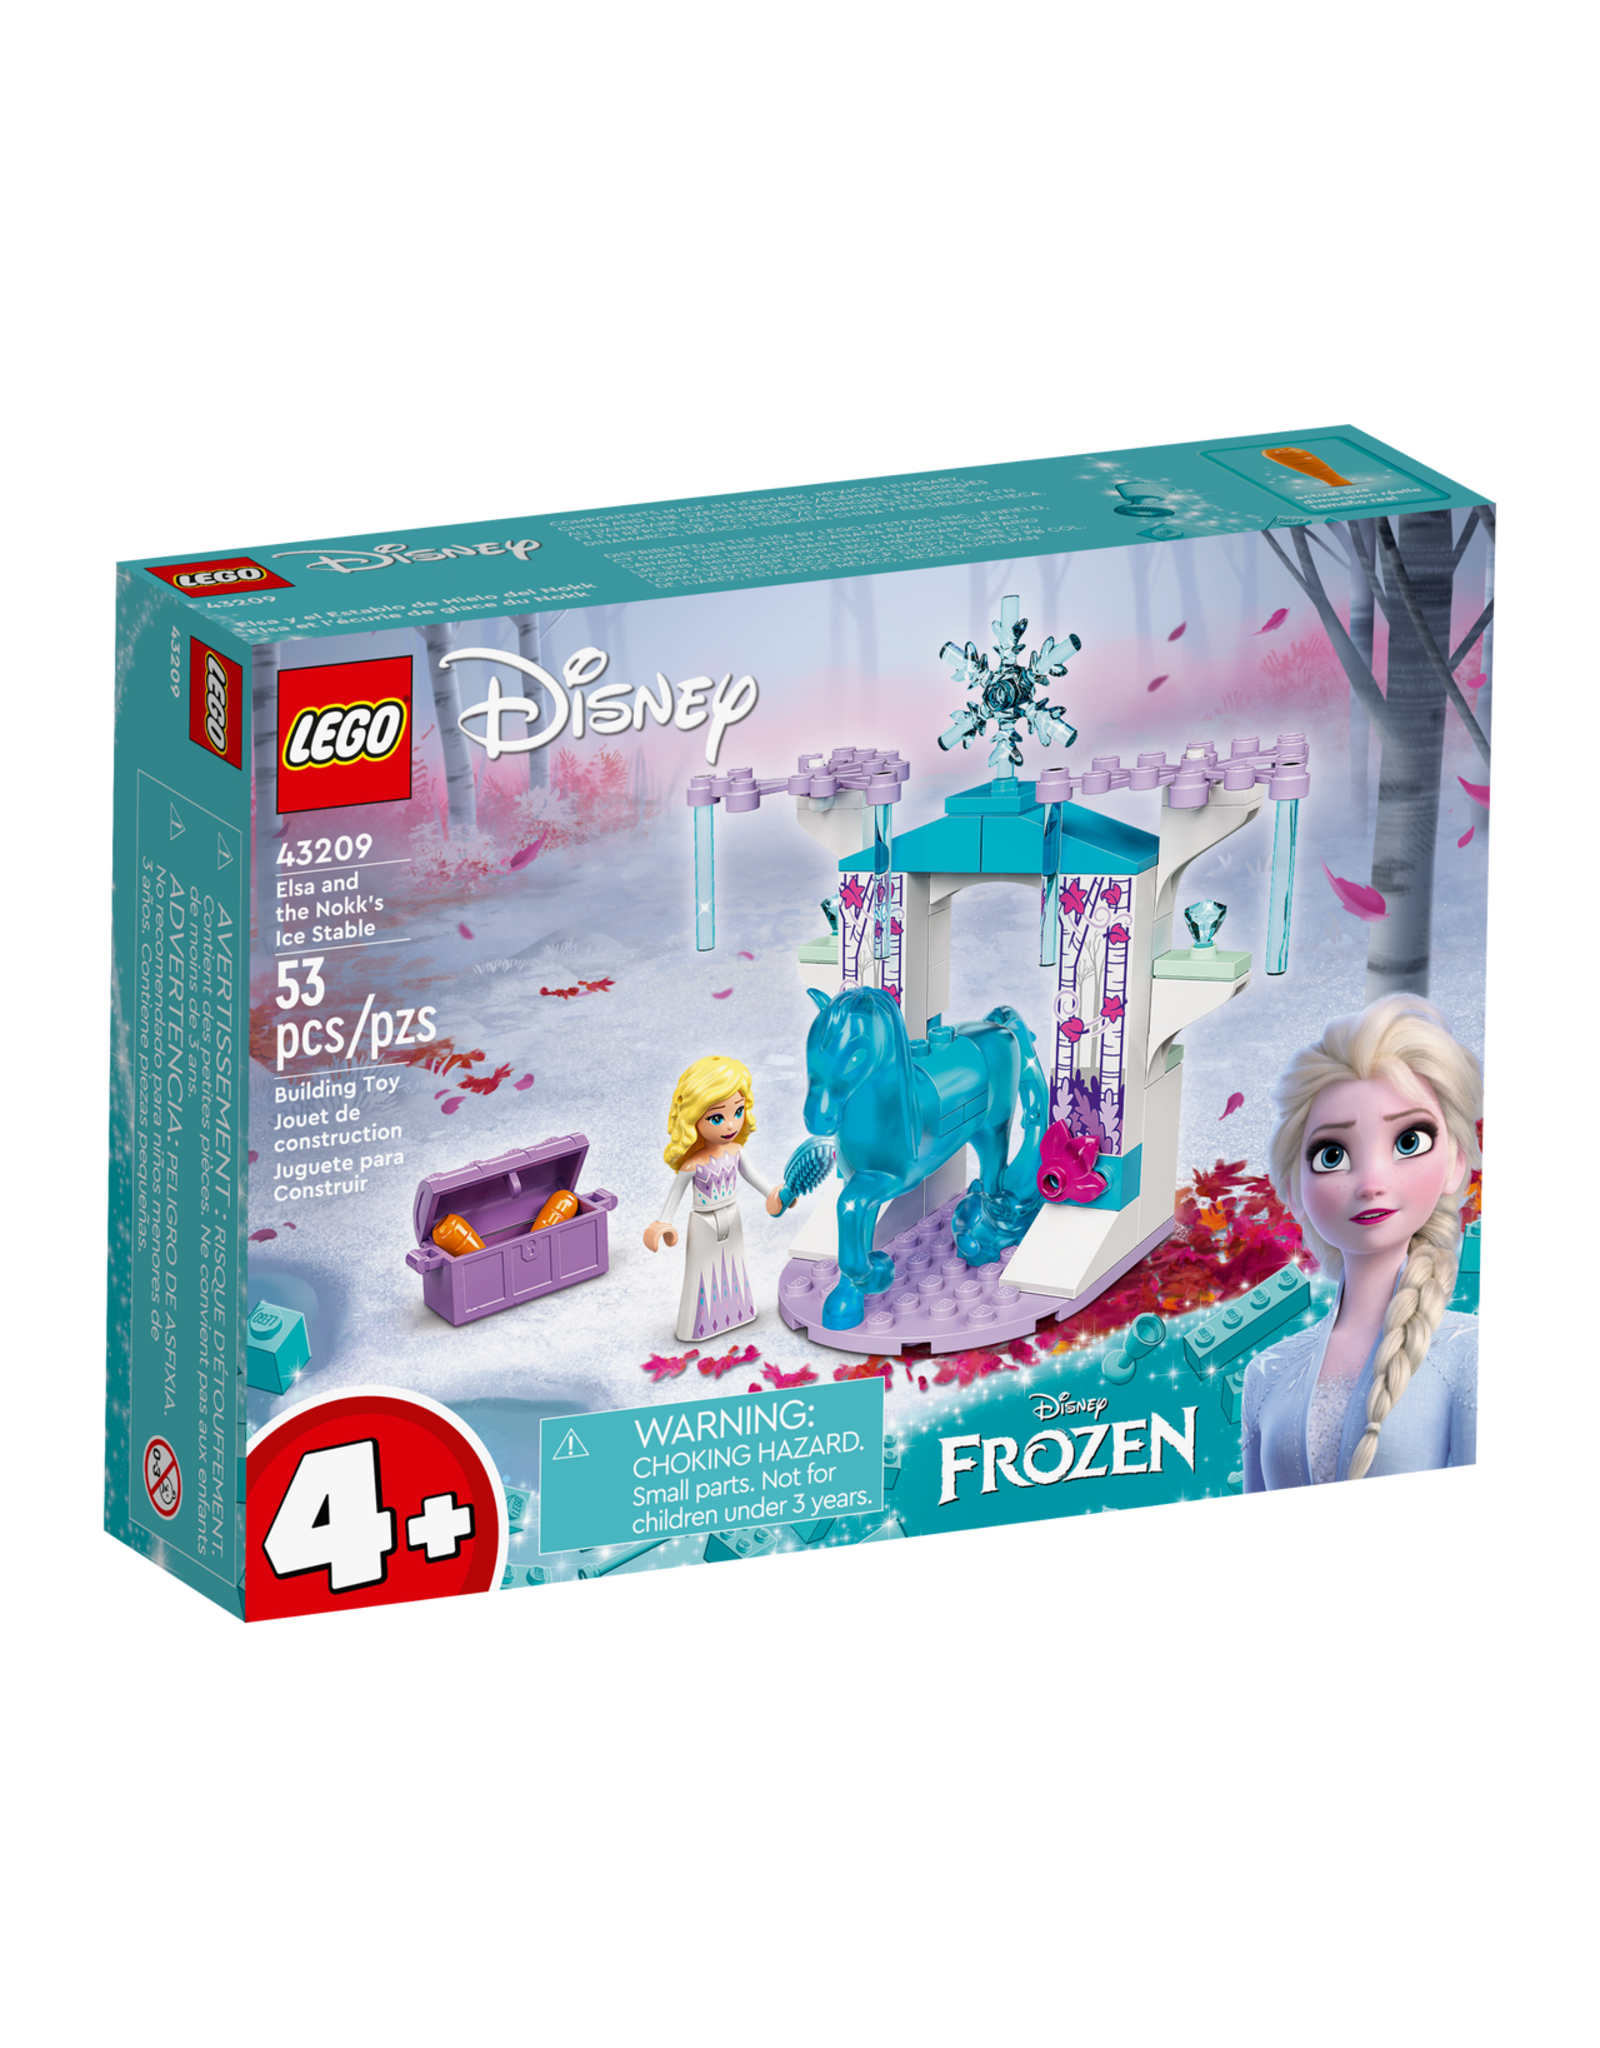 Lego Elsa and the Nokk’s Ice Stable